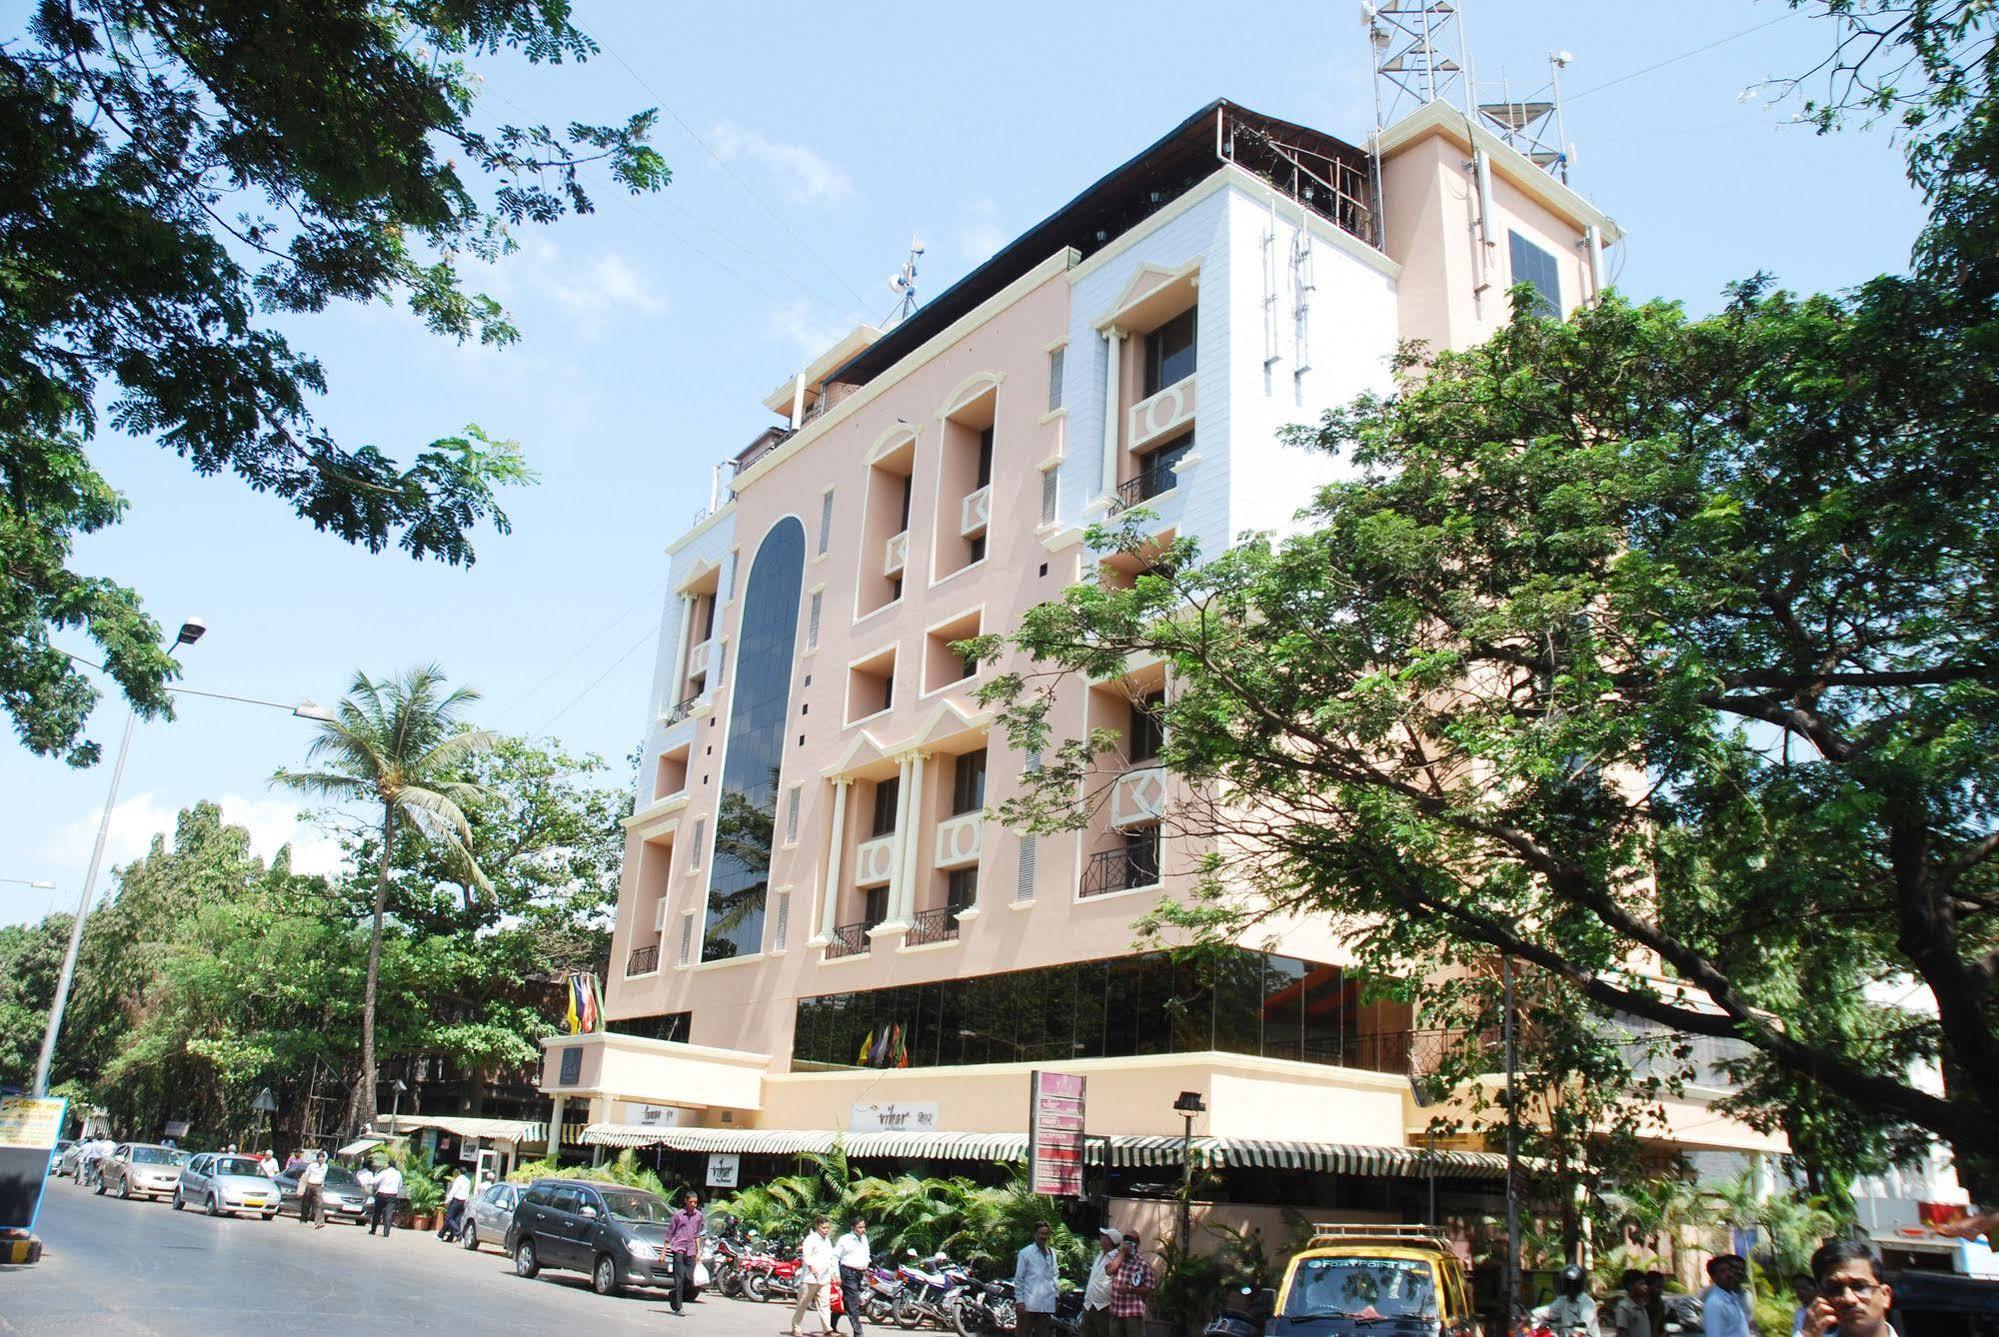 The International By Tunga Hotel Bombay Exterior foto